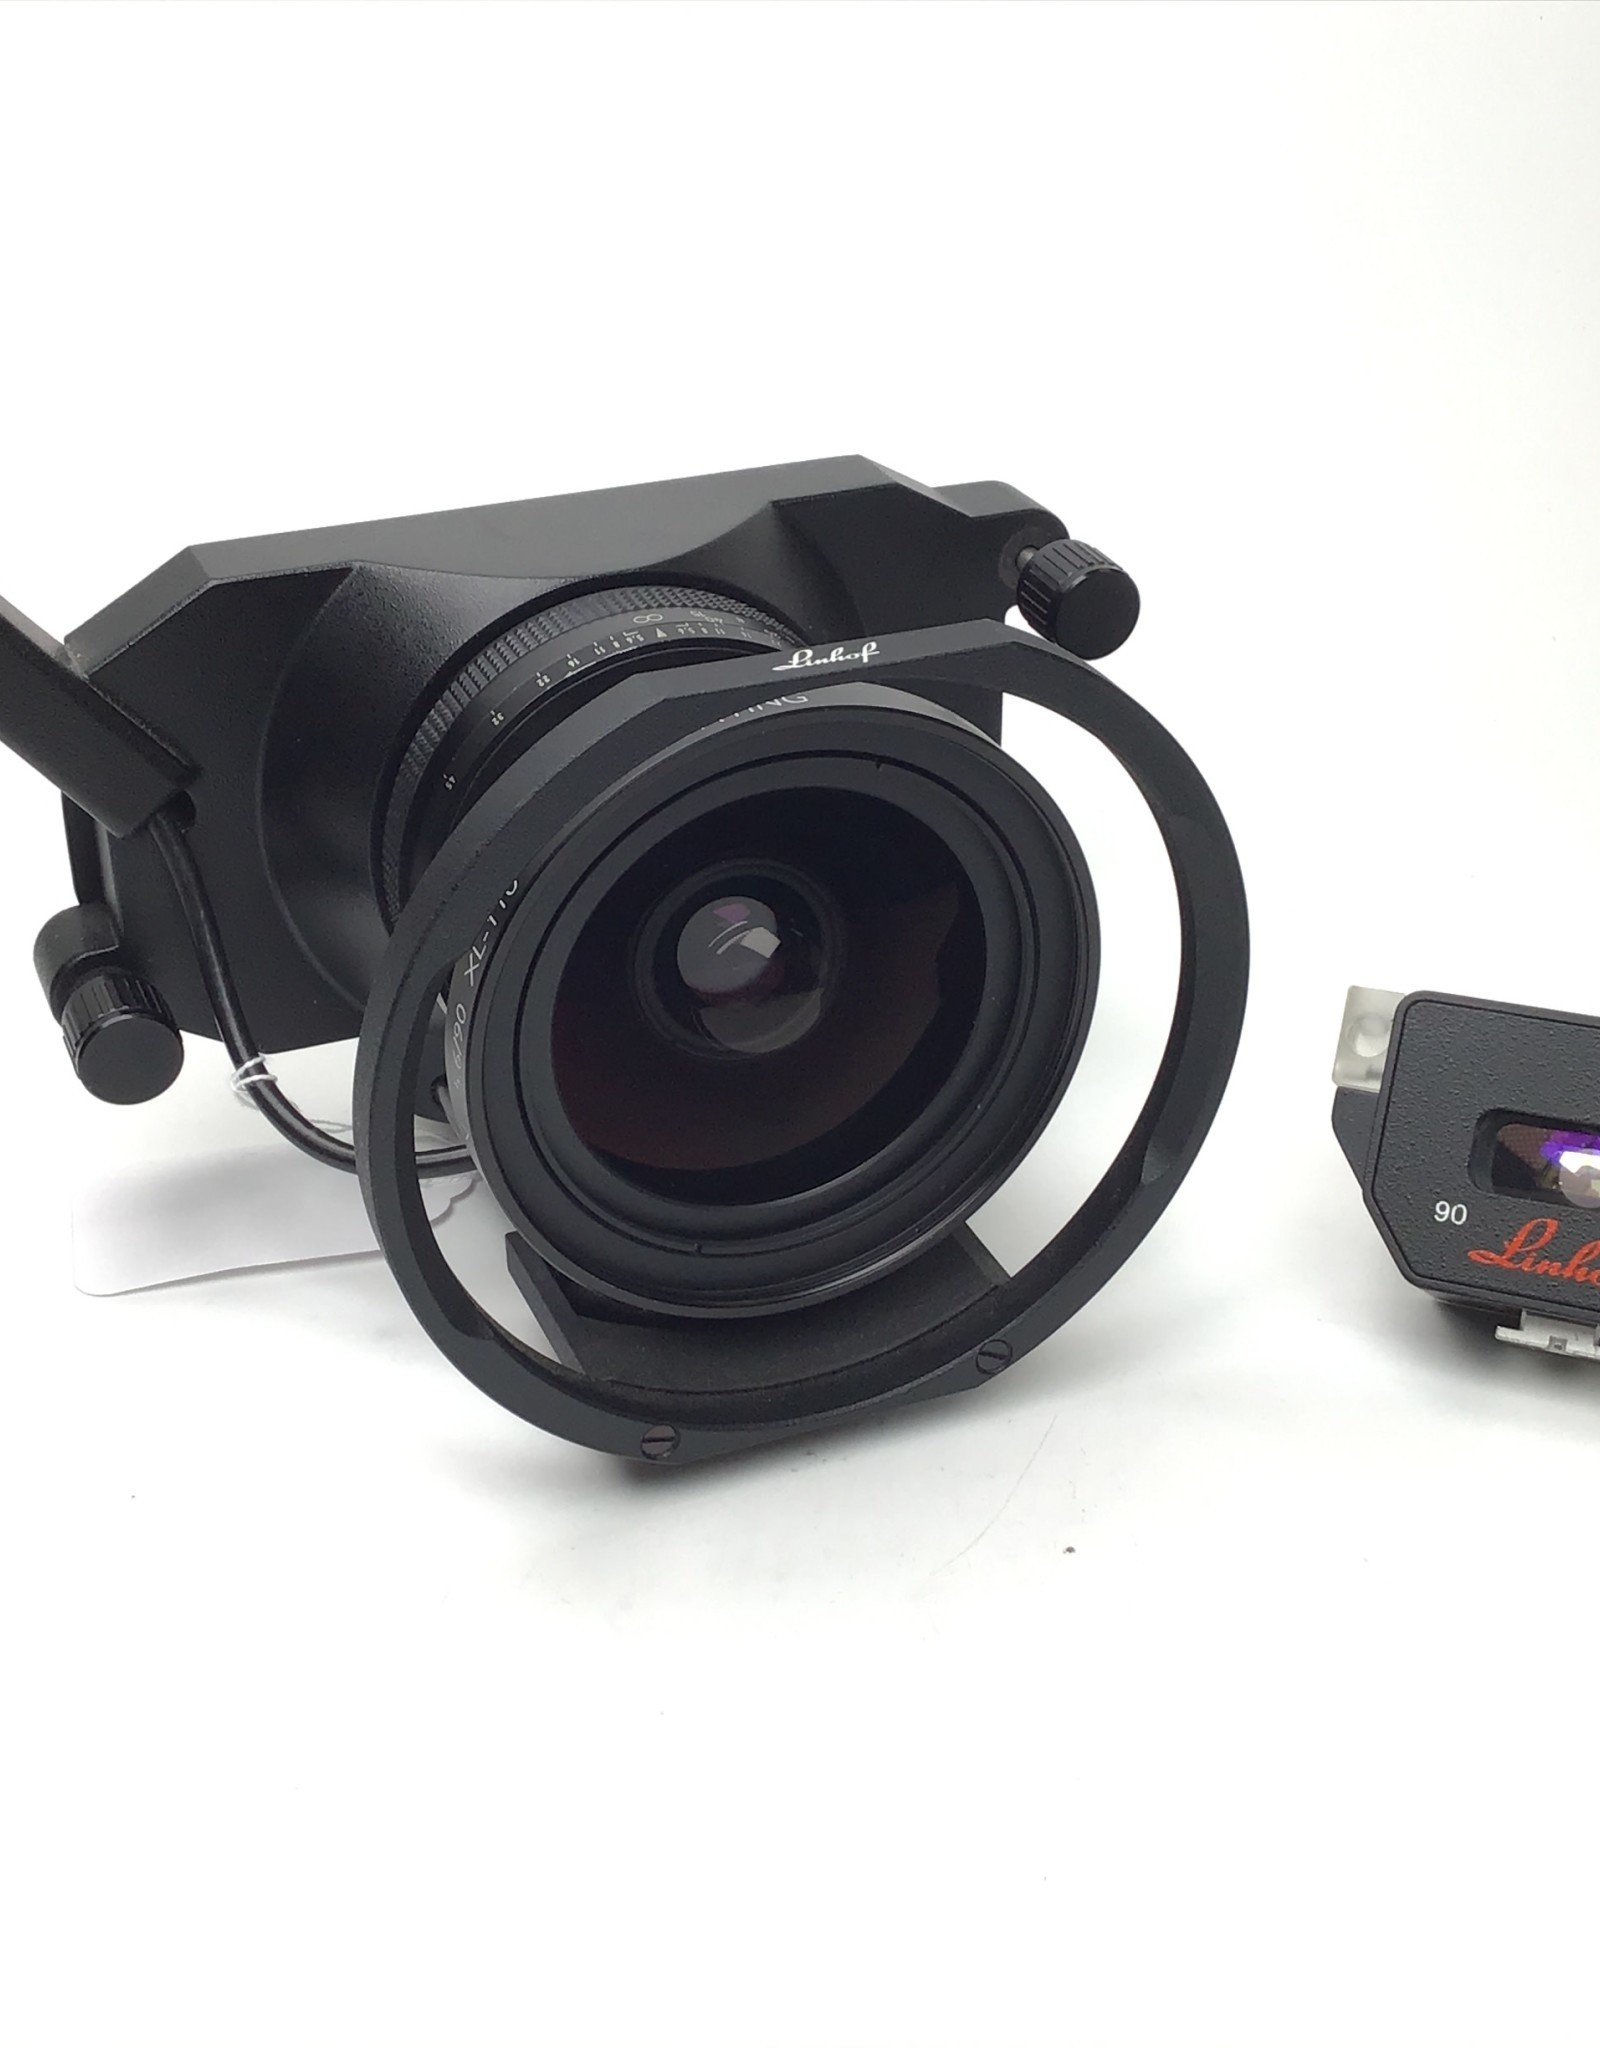 Linhof Linhof Technorama Super-Angulon XL 90mm f/5.6 Lens Unit w/ Finder  Used Good